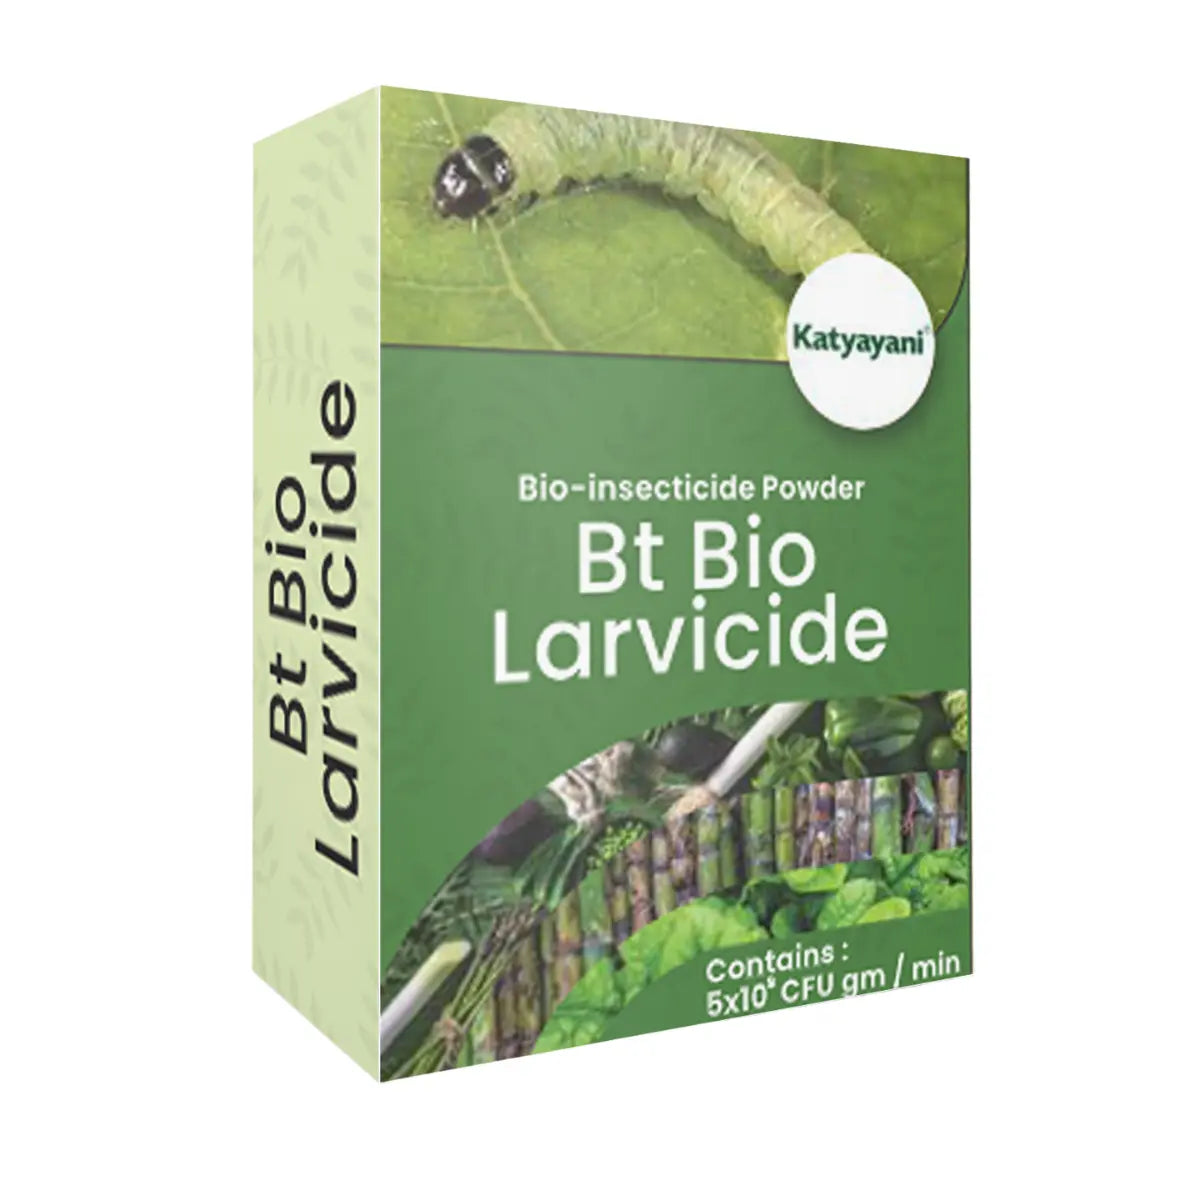 Katyayani Bt Bio Larvicide Powder | Bio Pesticide